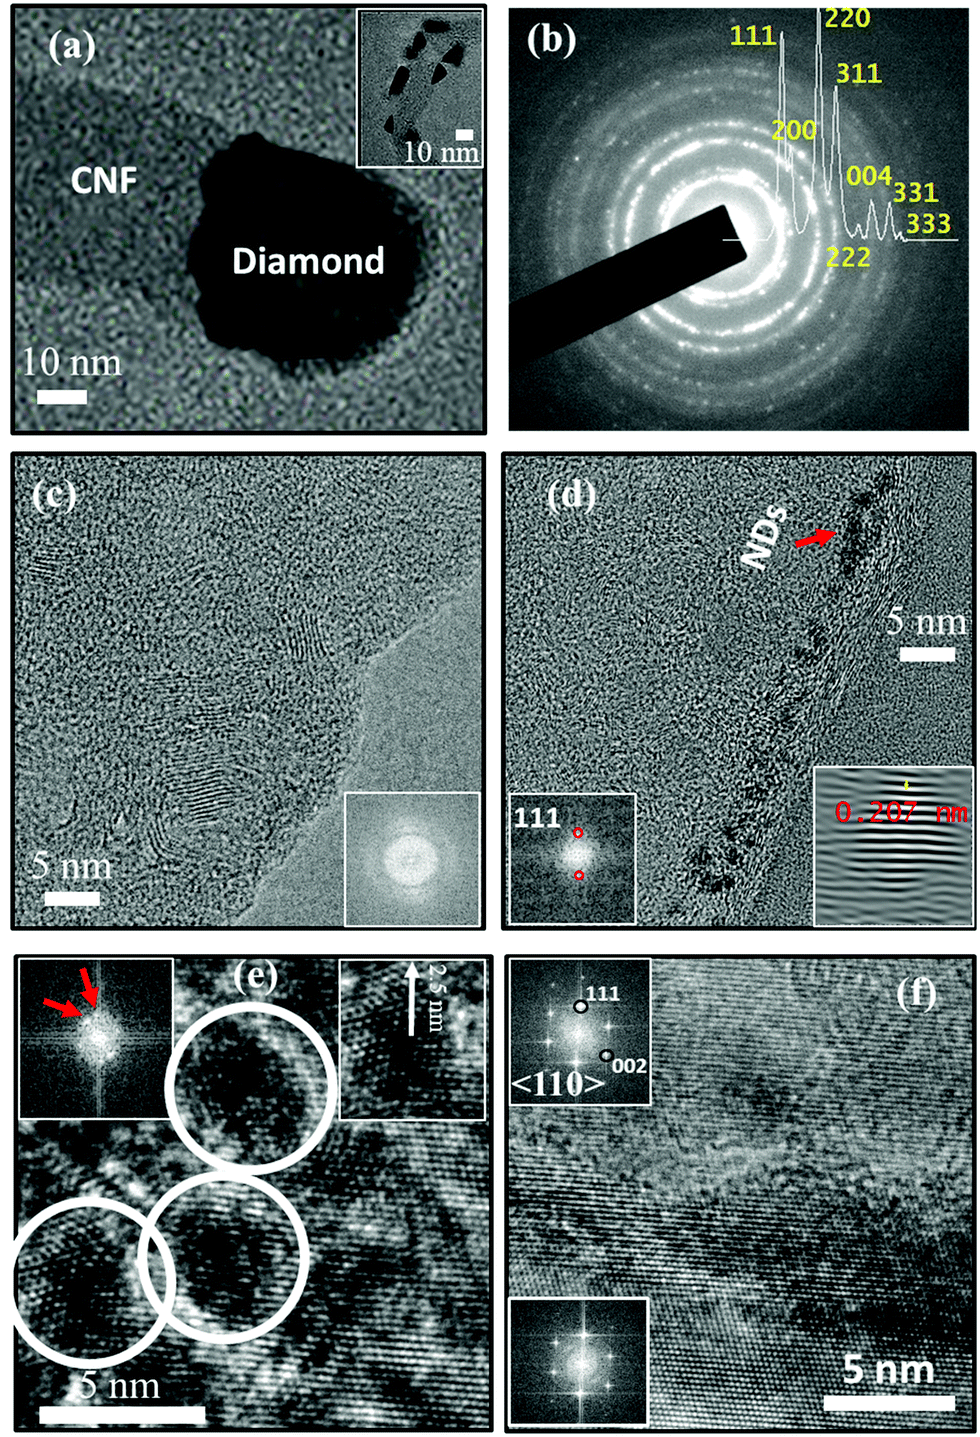 Direct conversion of carbon nanofibers into diamond nanofibers 